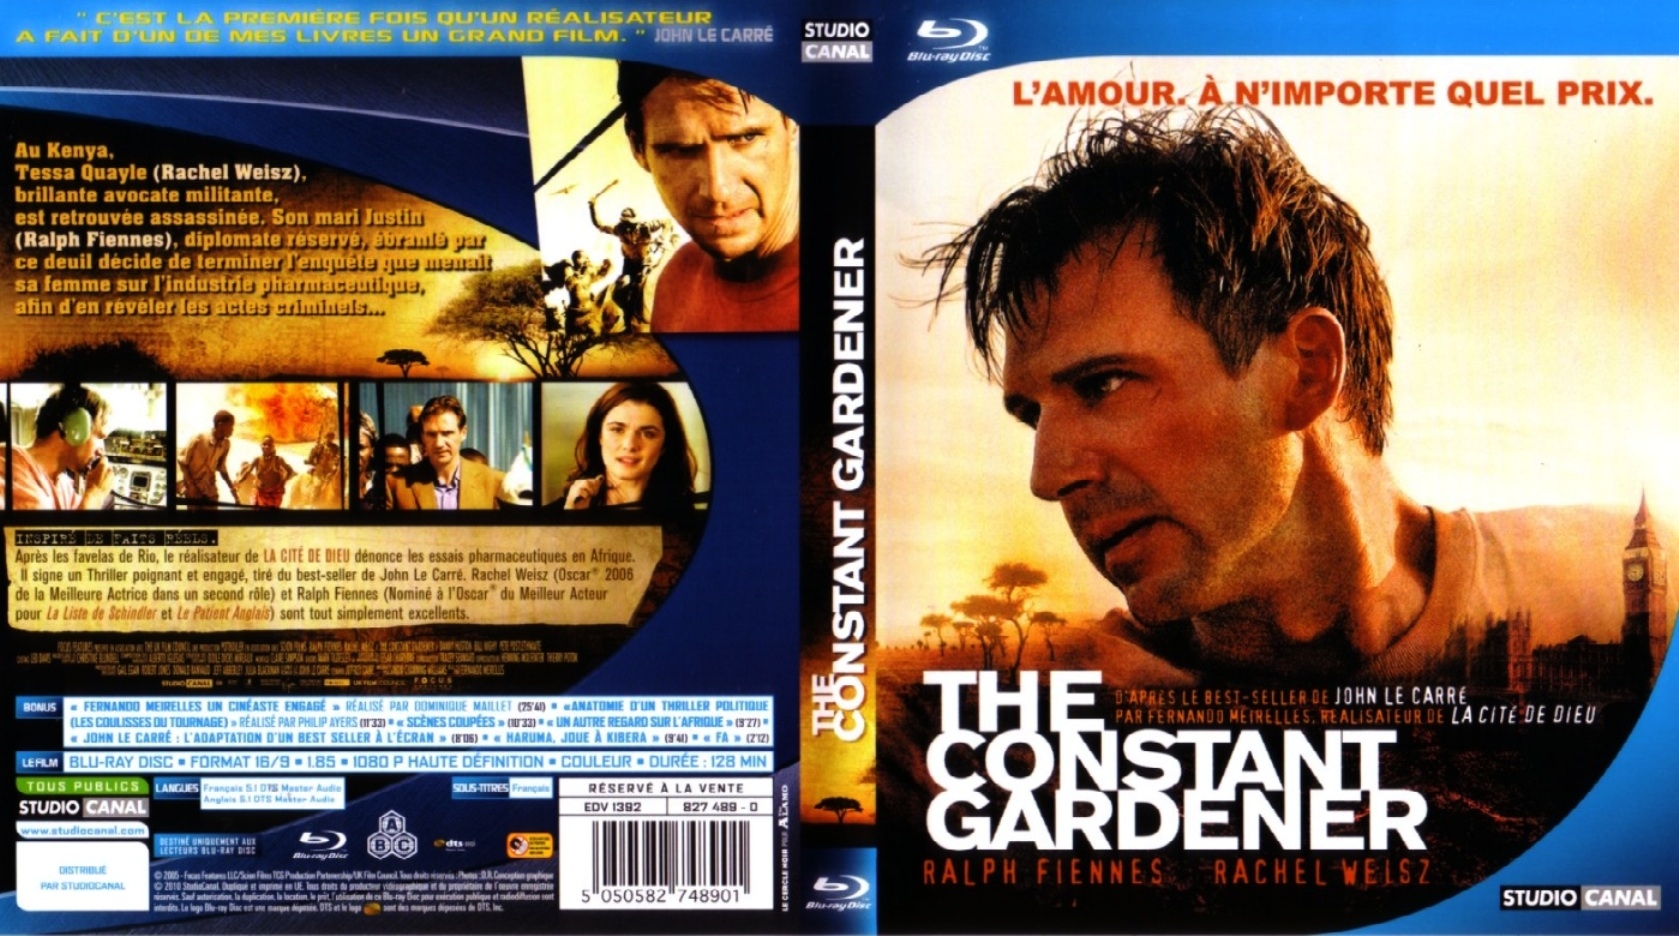 Jaquette DVD The constant gardener (BLU-RAY)